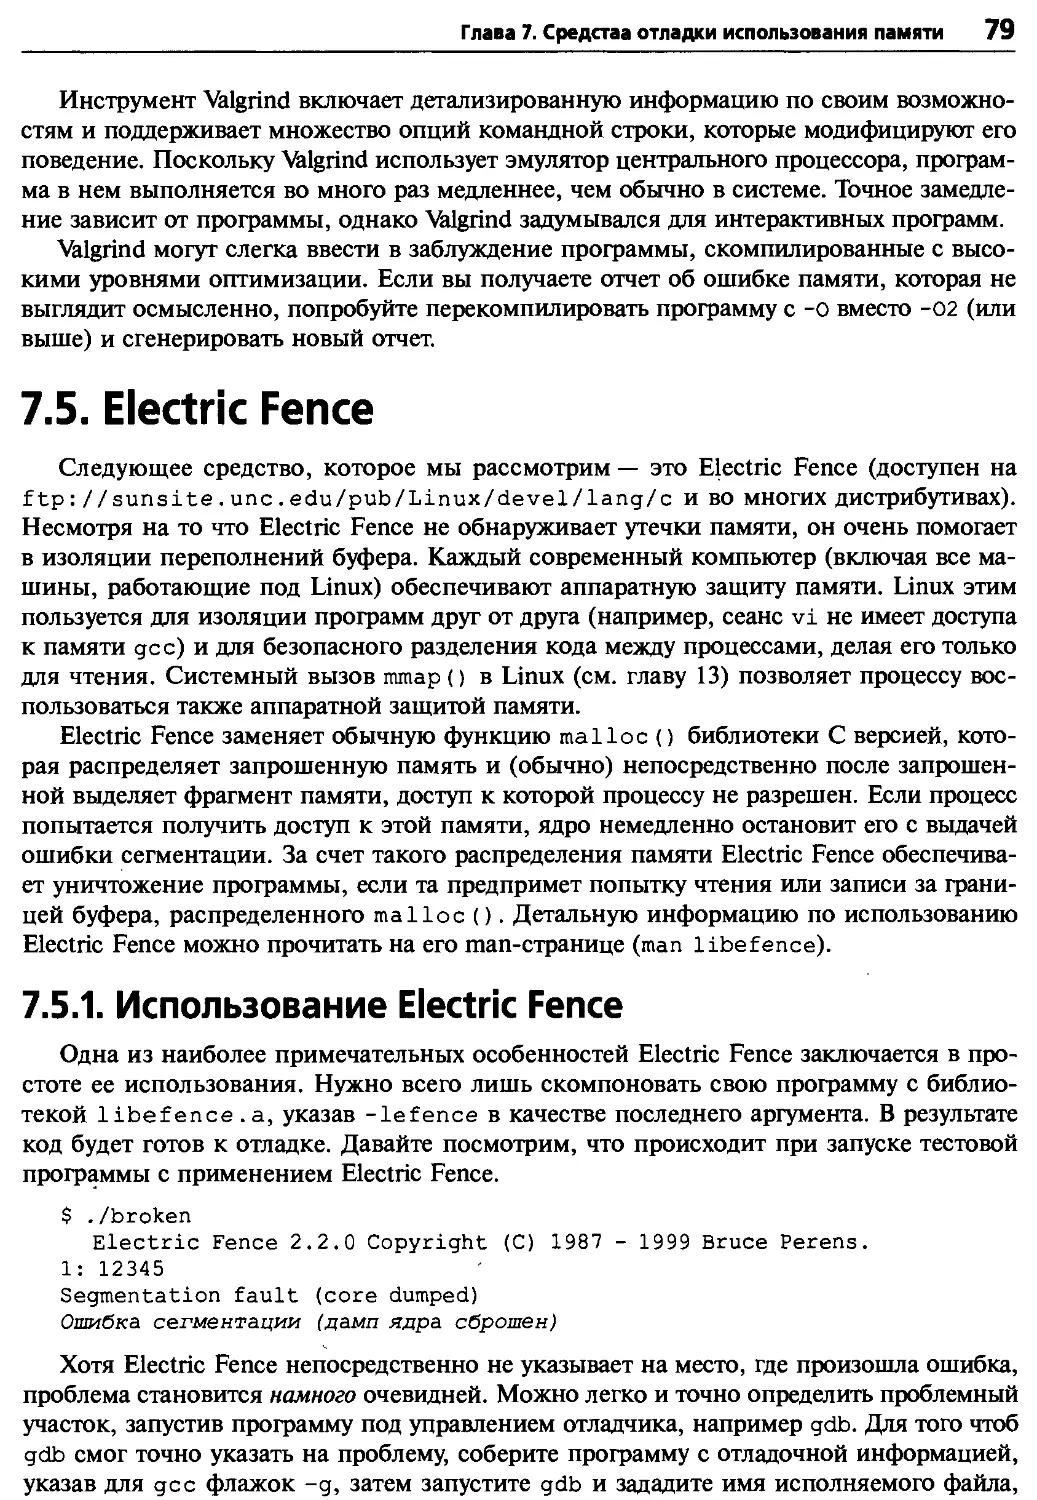 7.5. Electric Fence
7.5.1. Использование Electric Fence